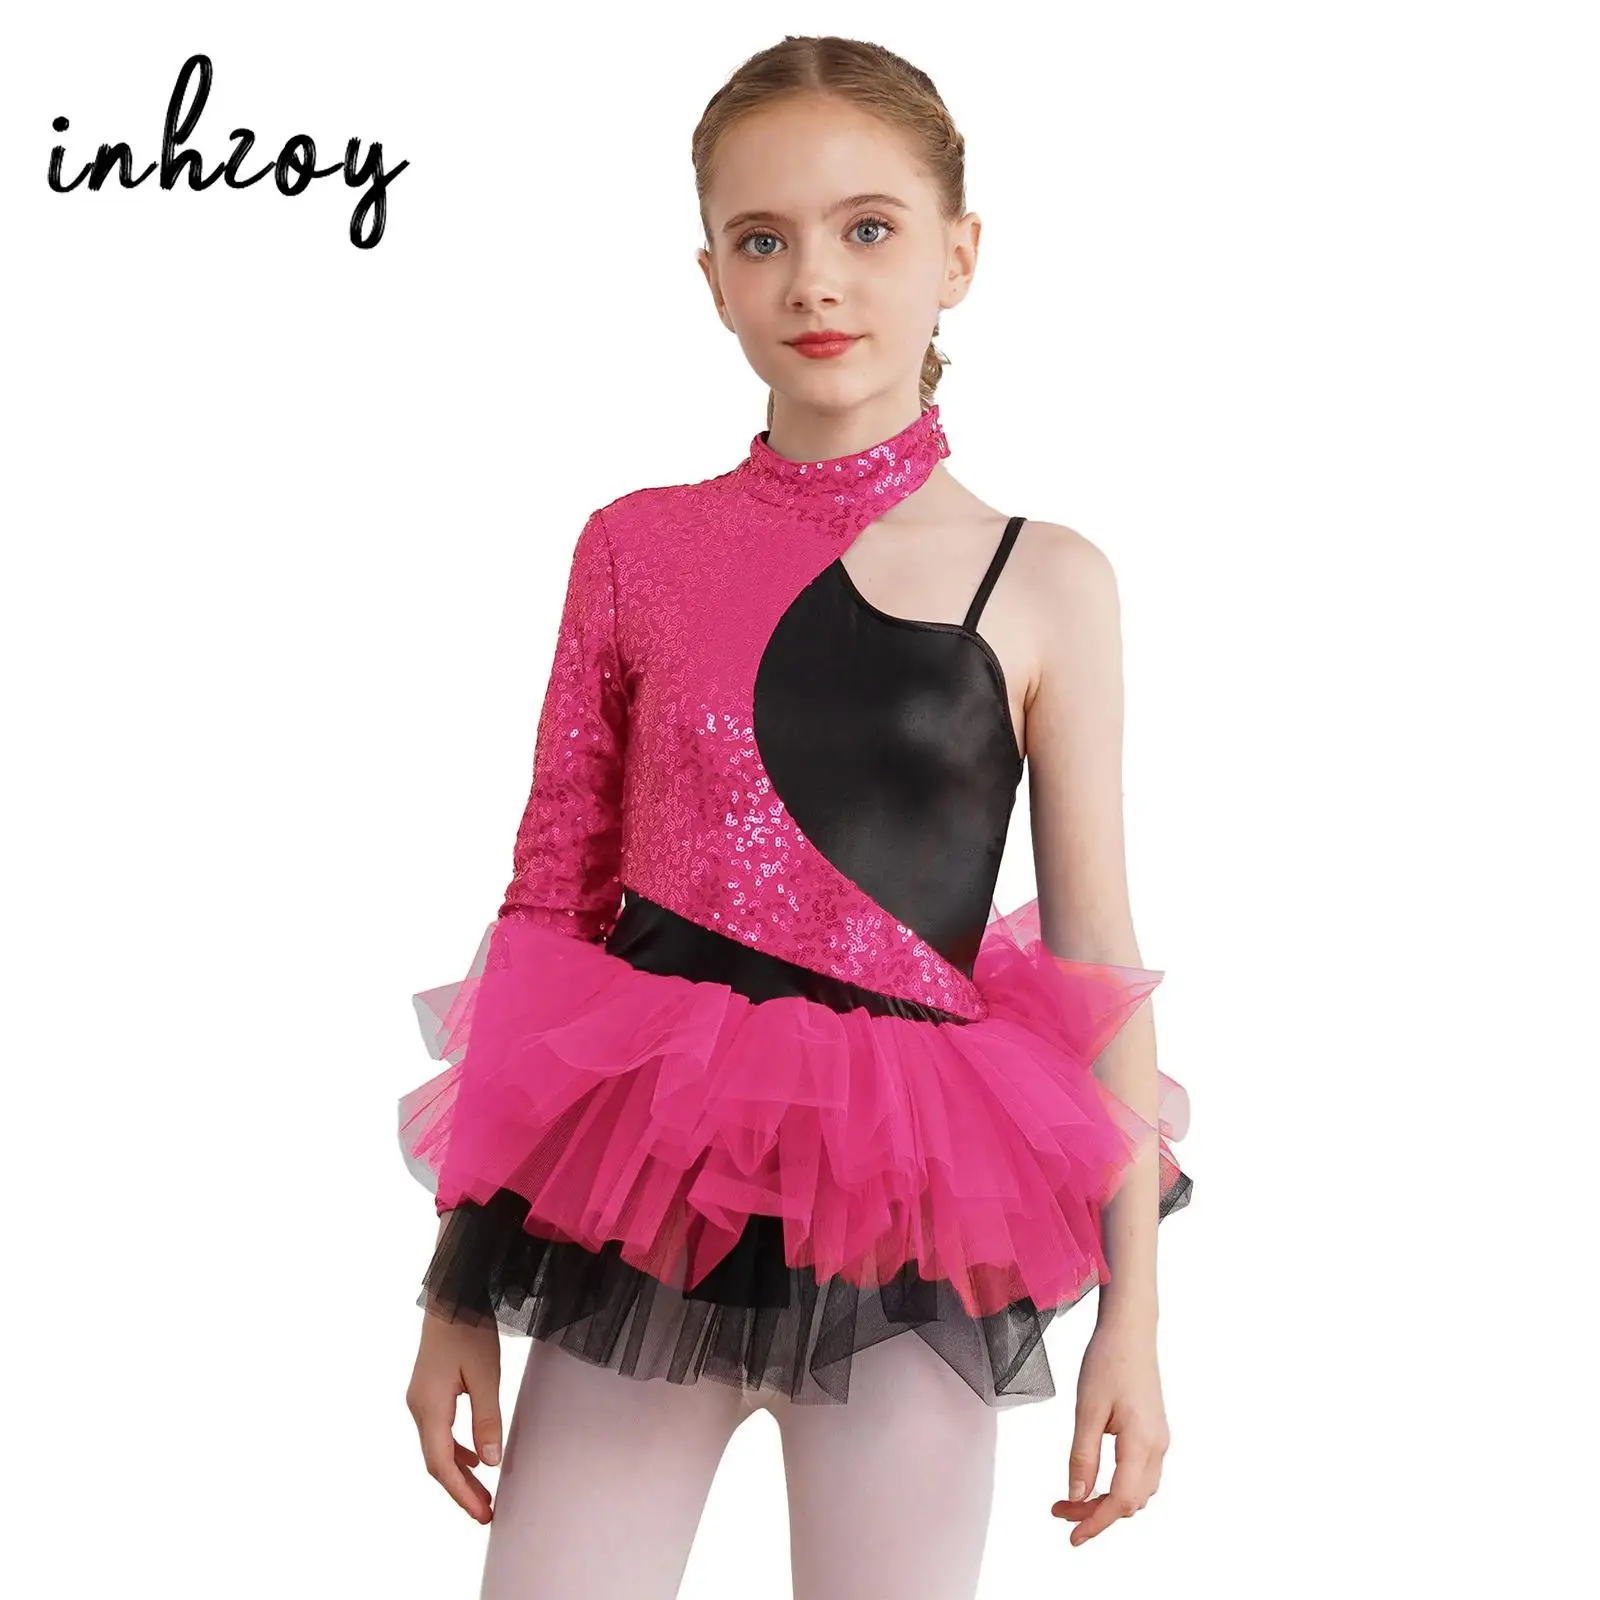 

Kids Girls Shiny Sequins Dance Dress Tulle Tutu Skirt Ballet Gymnastics Leotard Figure Ice Skating Costume Jazz Latin Dancewear